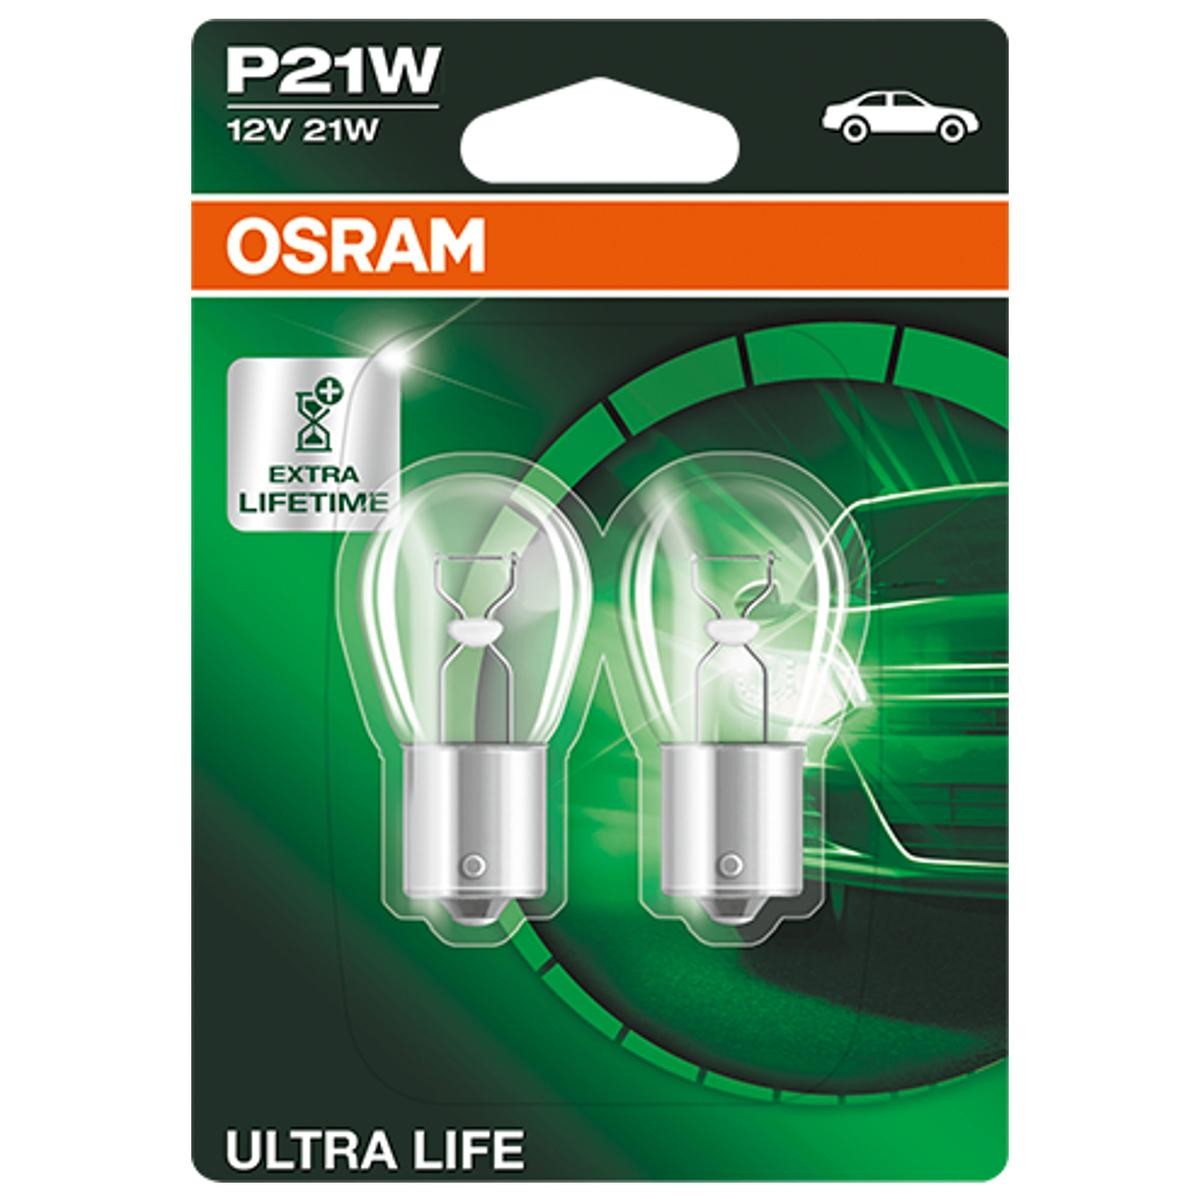 P21W OSRAM ULTRA LIFE 7506ULT-02B Blinkerbirne 12V 21W, P21W